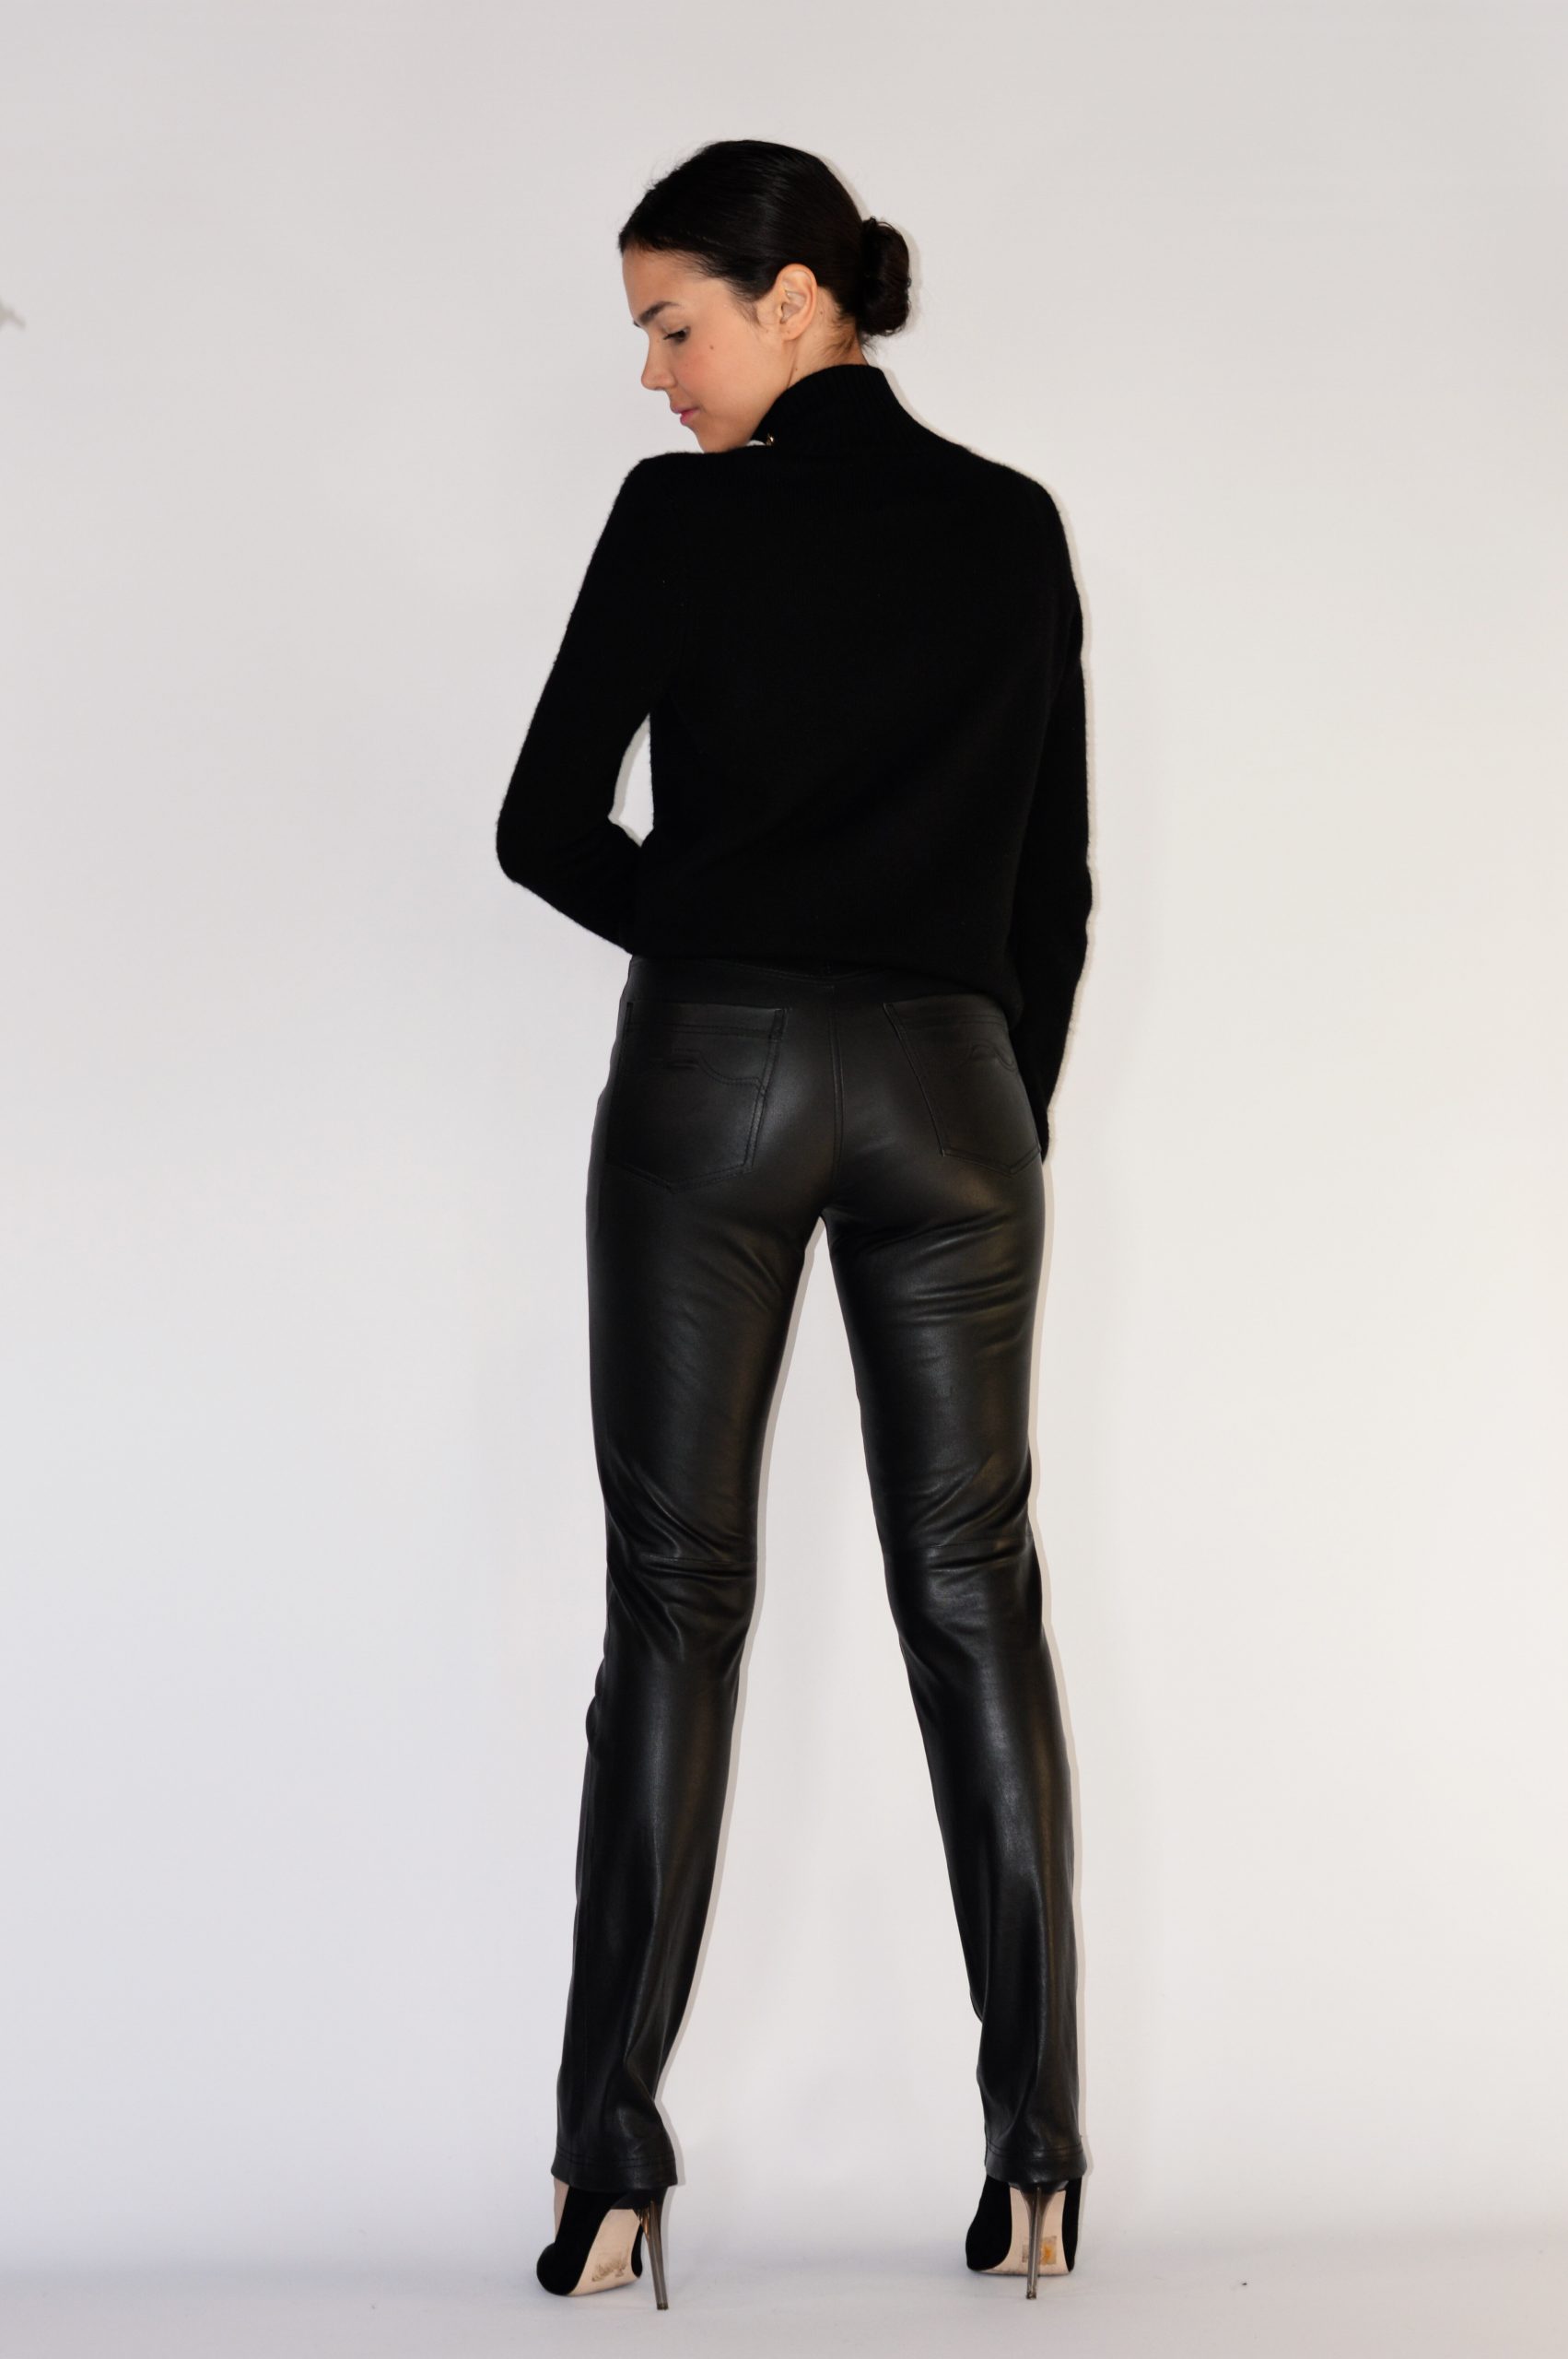 Slim Fit Leather Pants - Model: Slim, handmade by LET HER